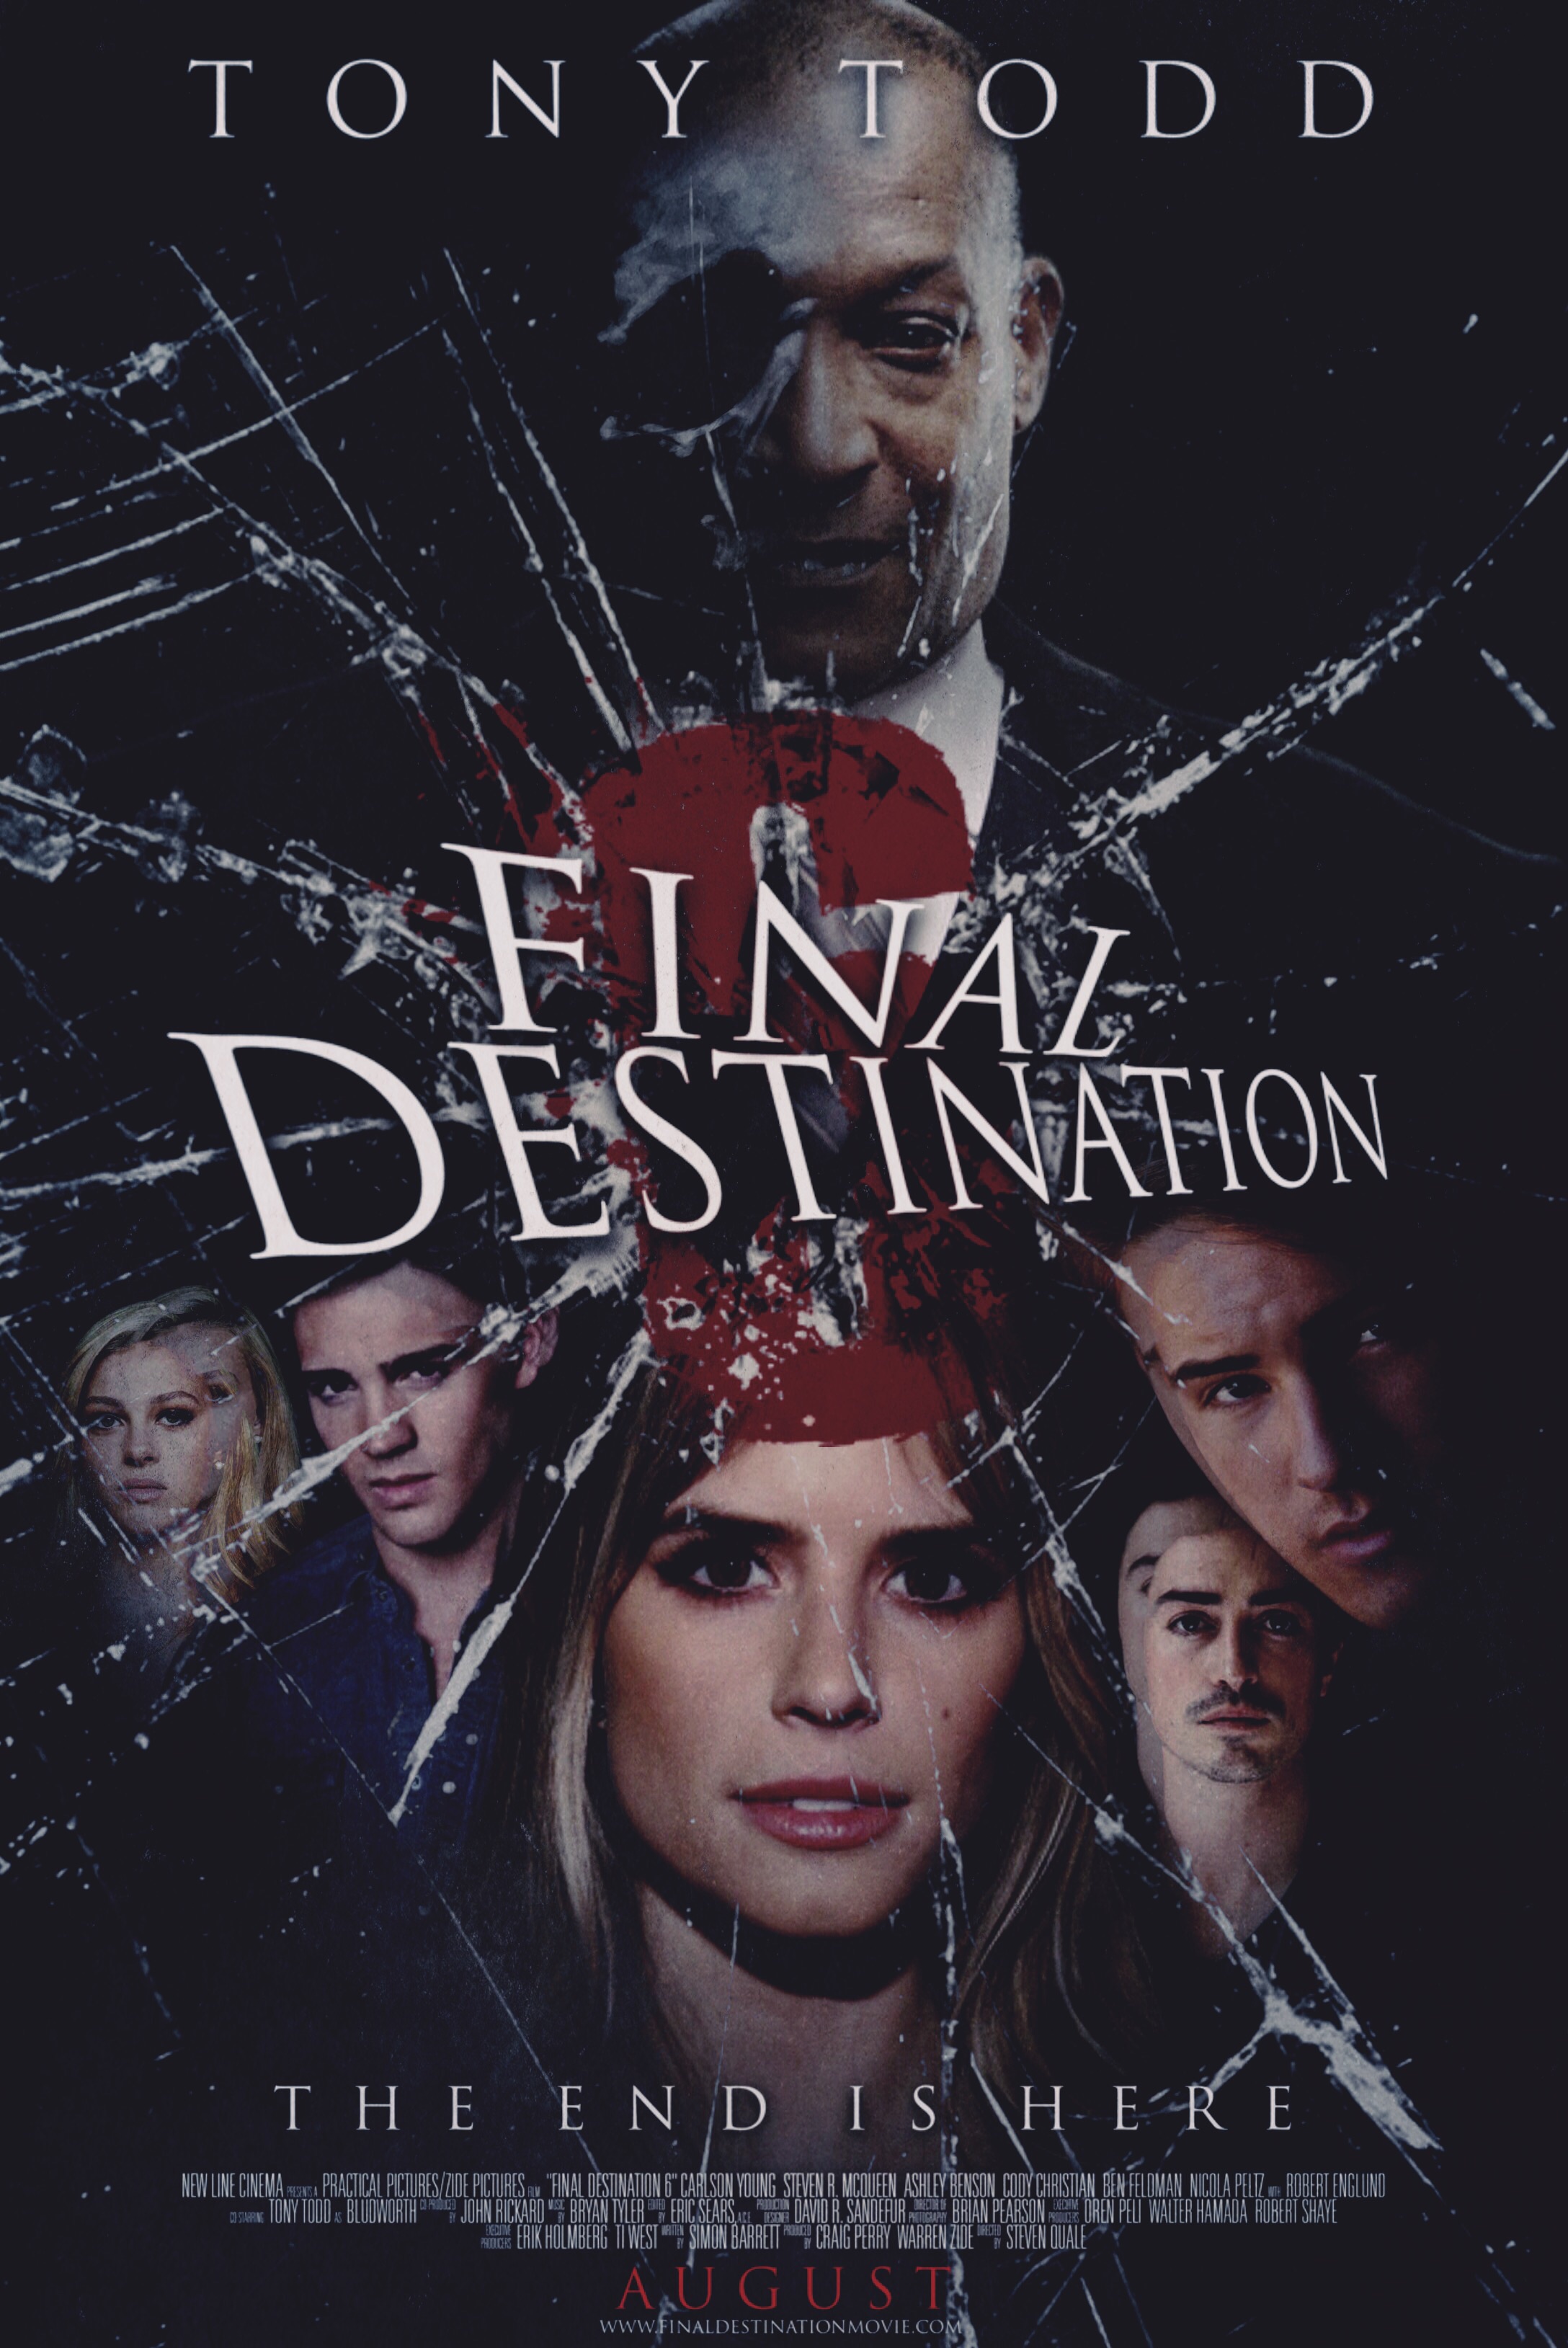 Final destination 4 movie free download mp4